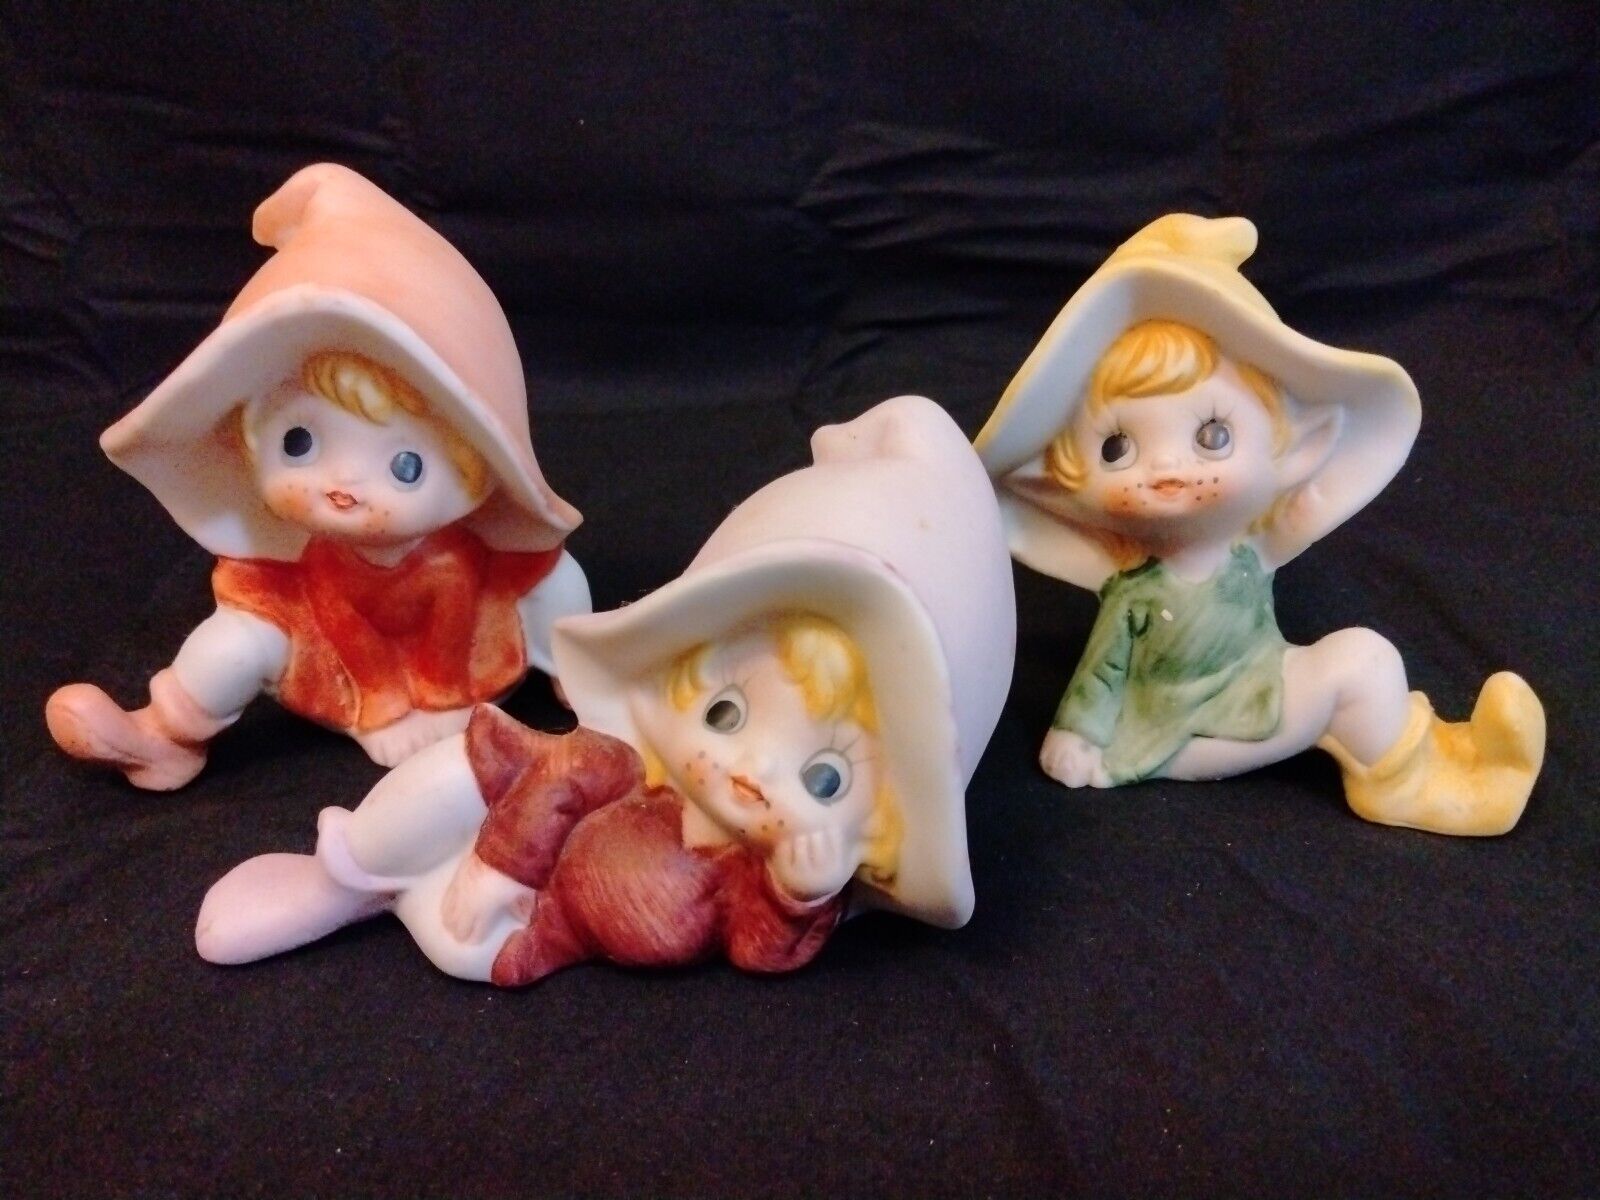 Vintage Homco Garden Pixie Elf Fairies Ceramic Figurines 5213 Set of 3 